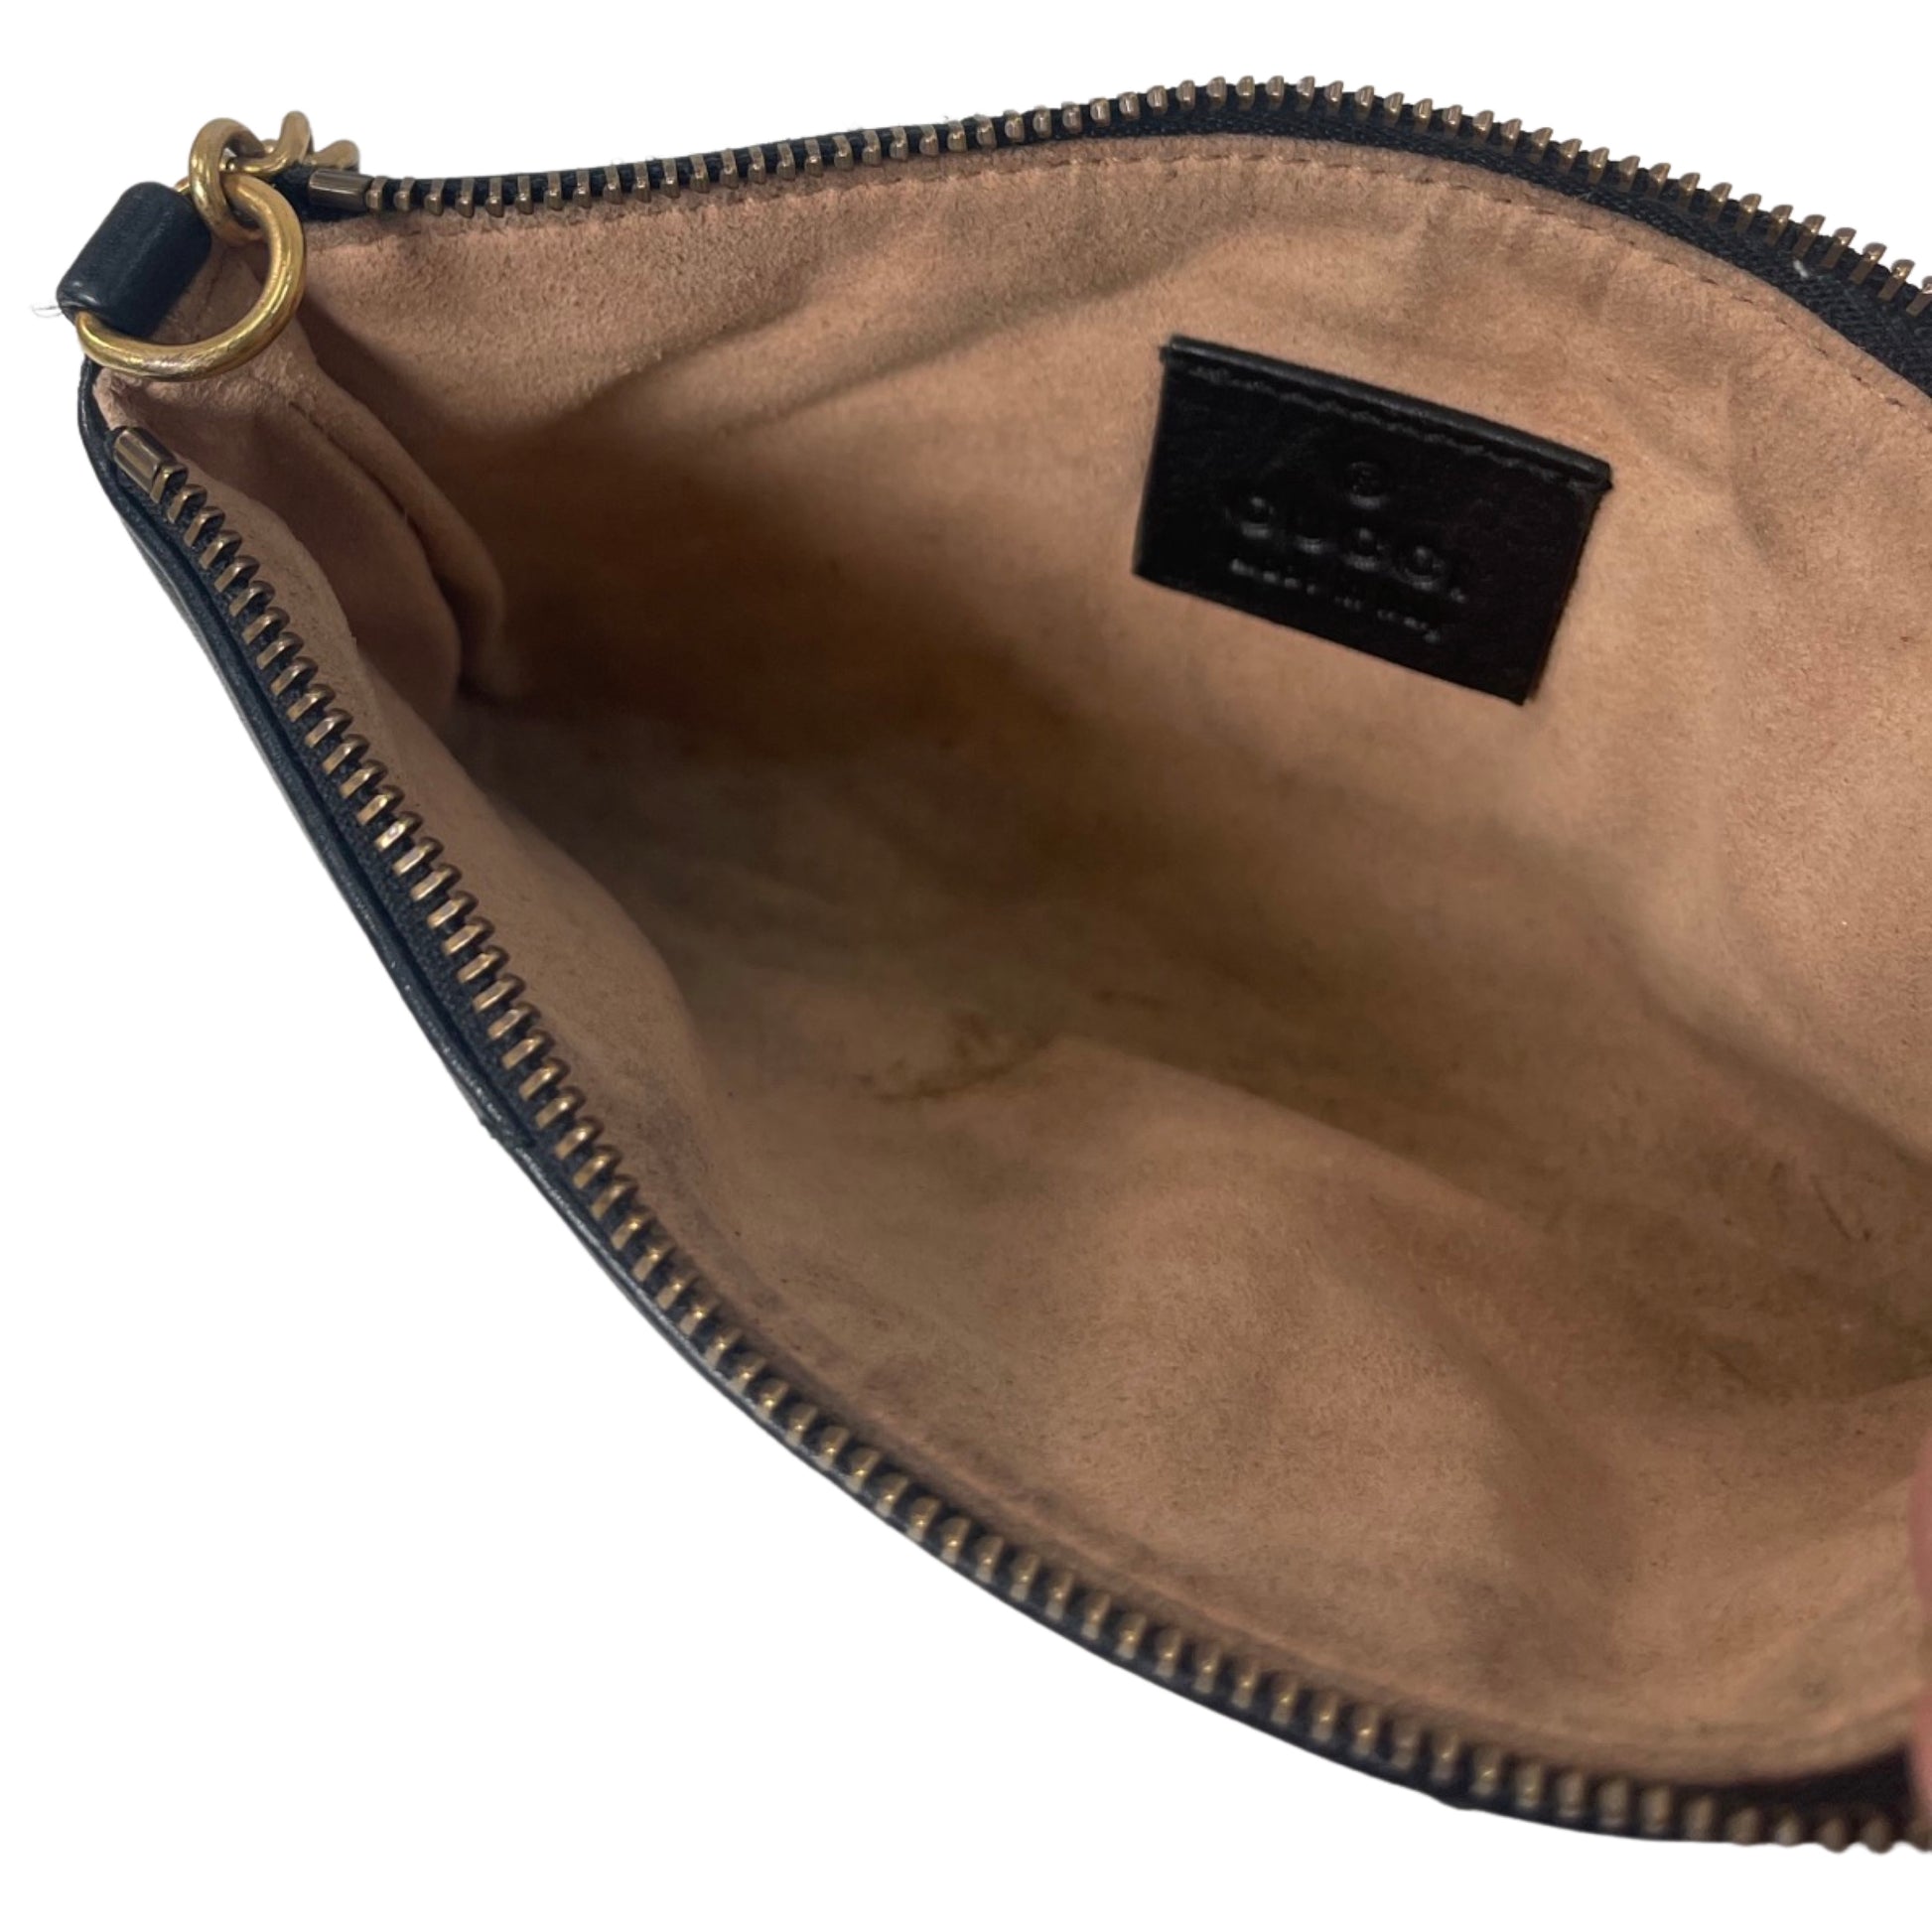 Black Gucci Mini Bags for Women Amiri - CamaragrancanariaShops Lesotho -  Large Falabella Fold-Over Tote Bag